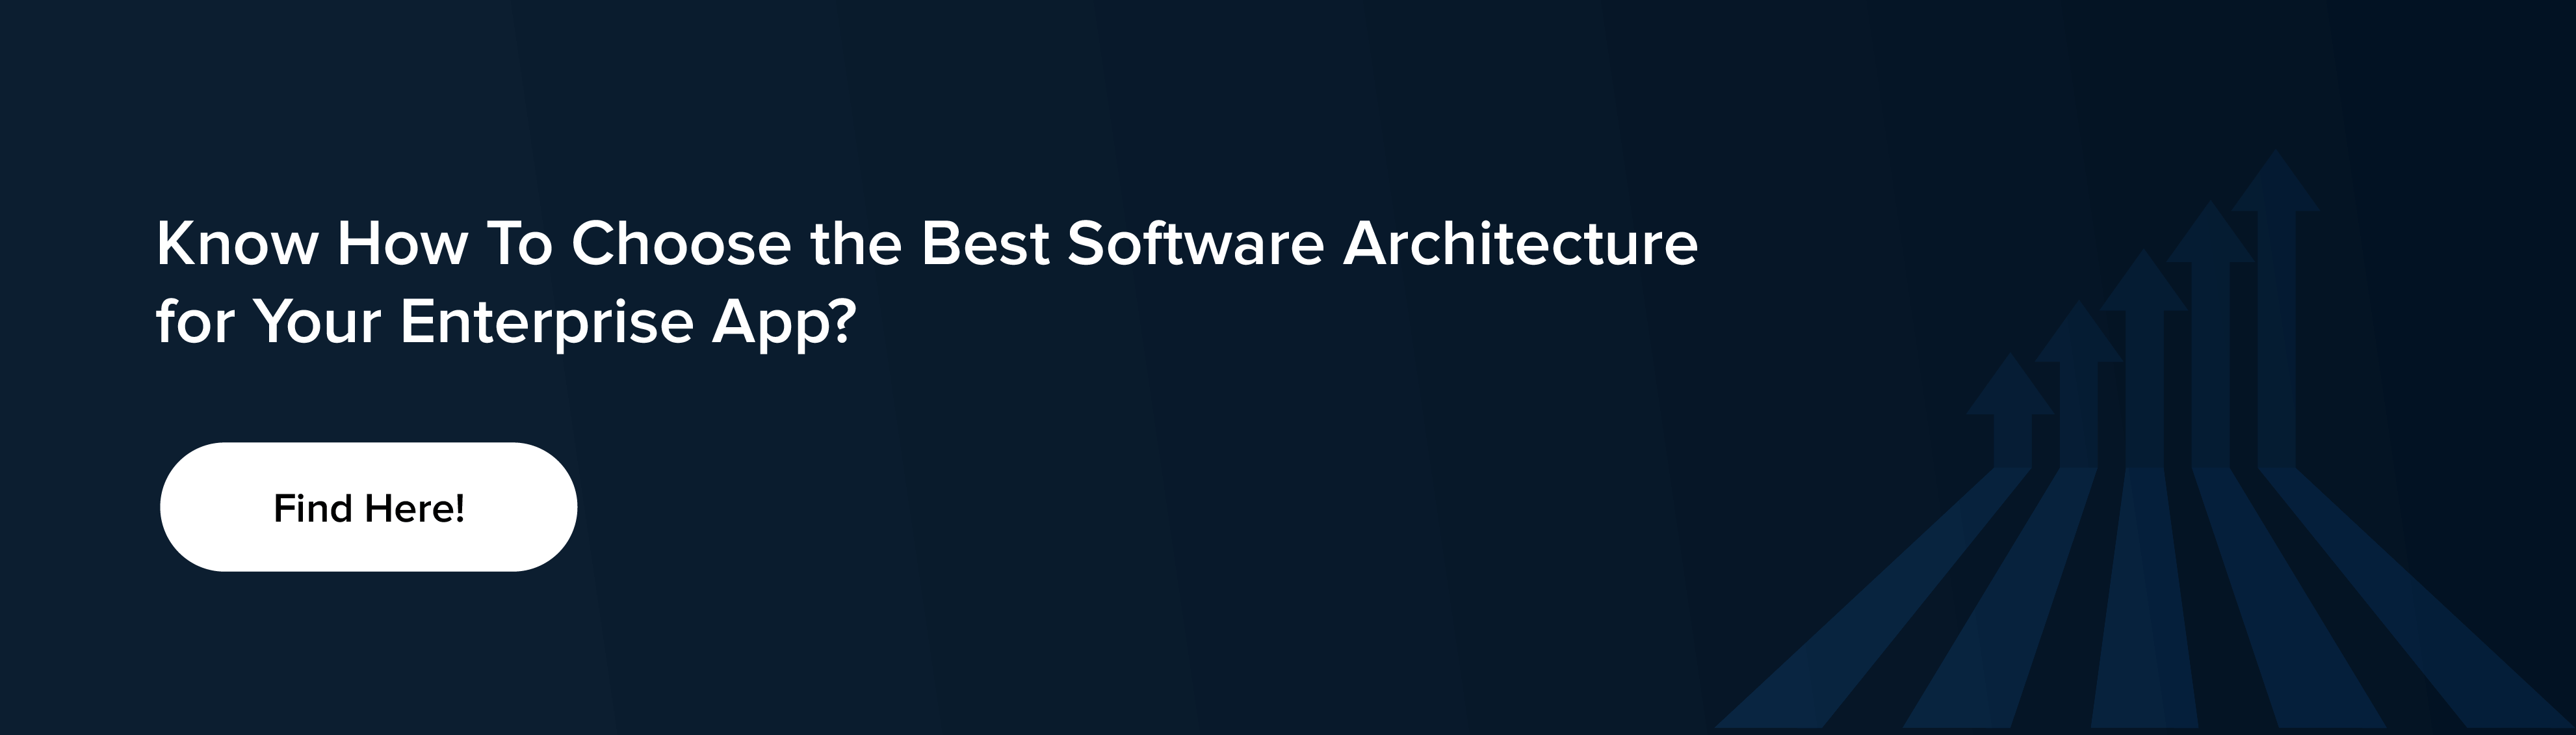 best software architecture for enterprize app